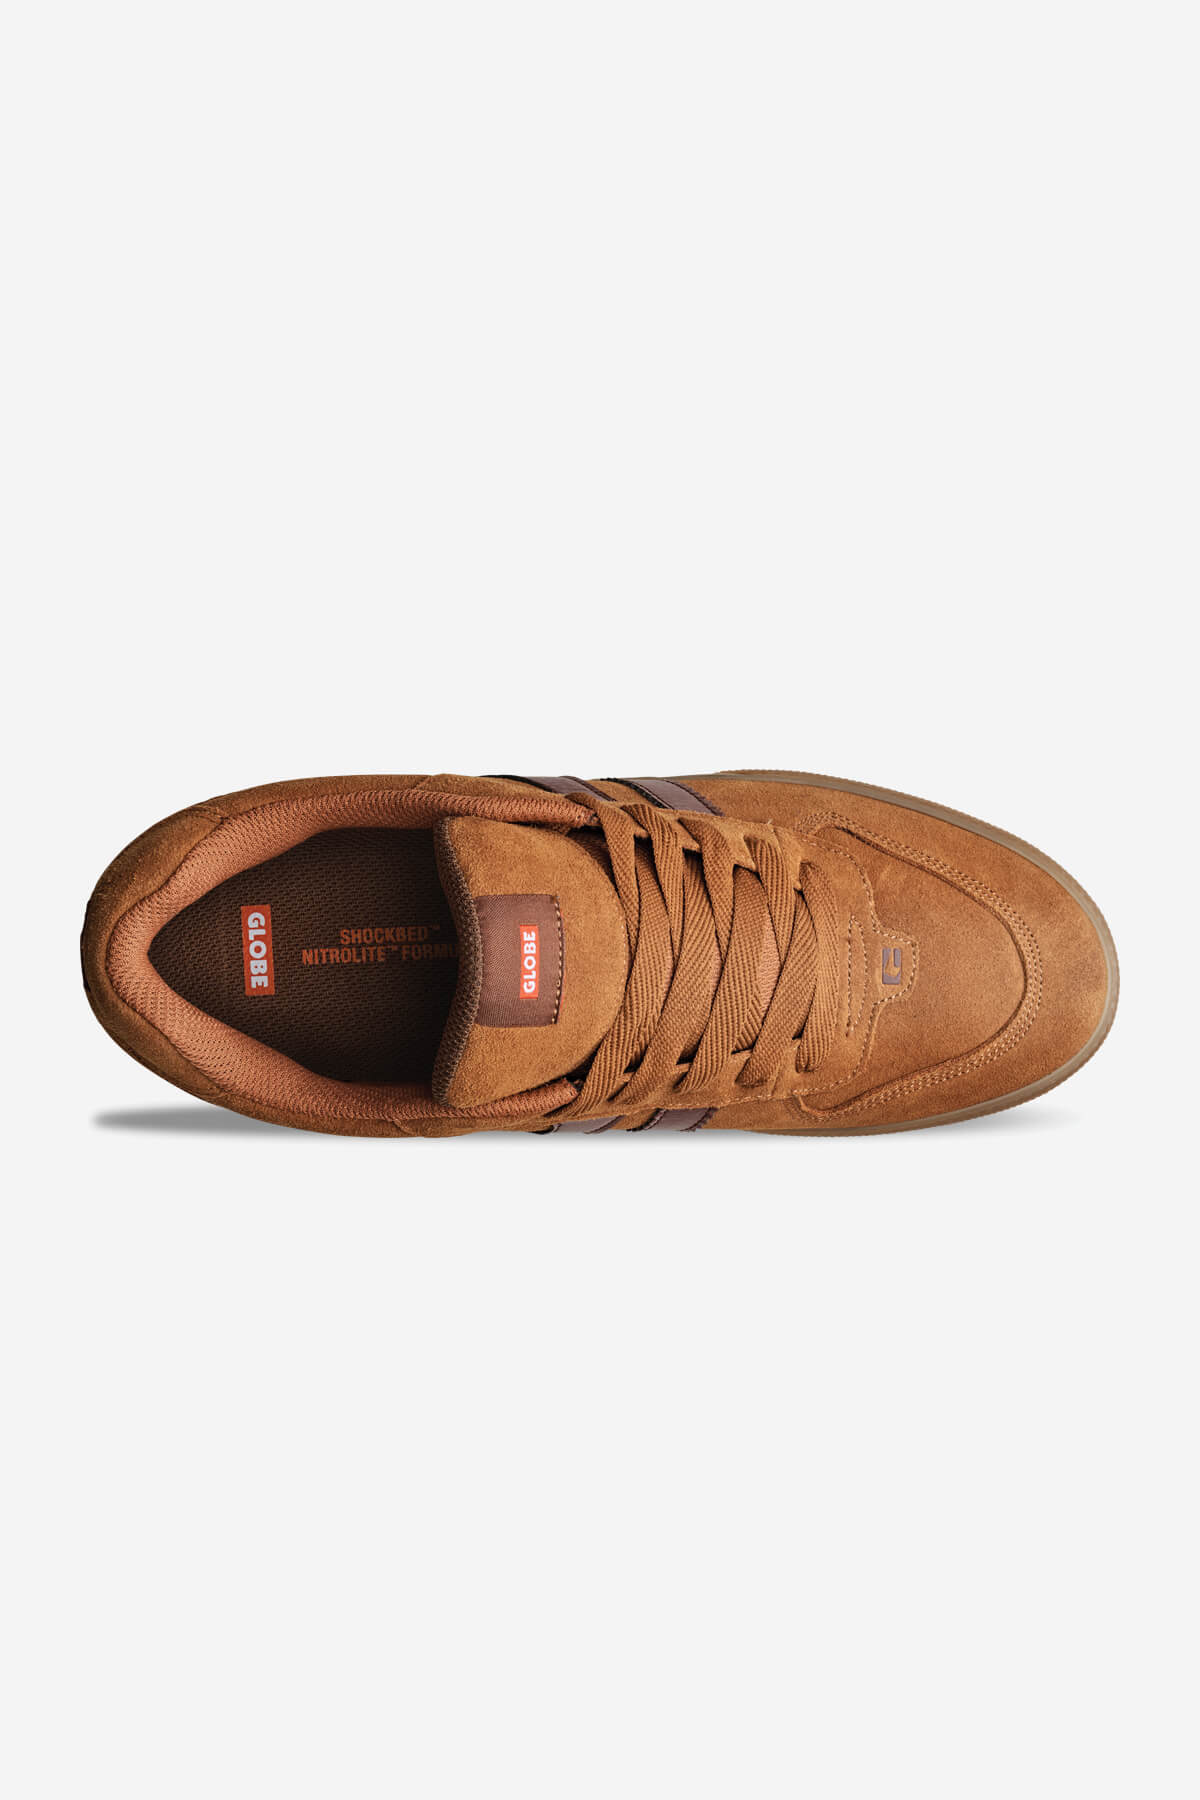 encore-2 butterscotch brown skateboard shoes